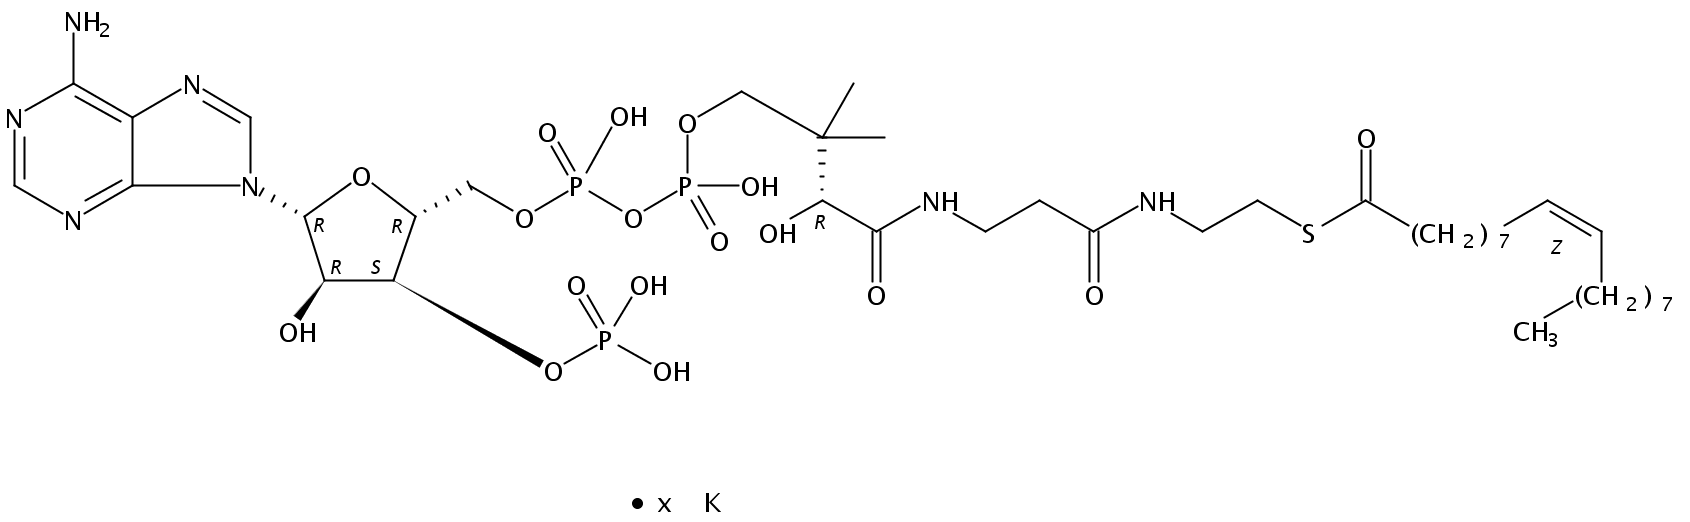 Structural formula of 9(Z)-Octadecenoyl Coenzyme A K salt